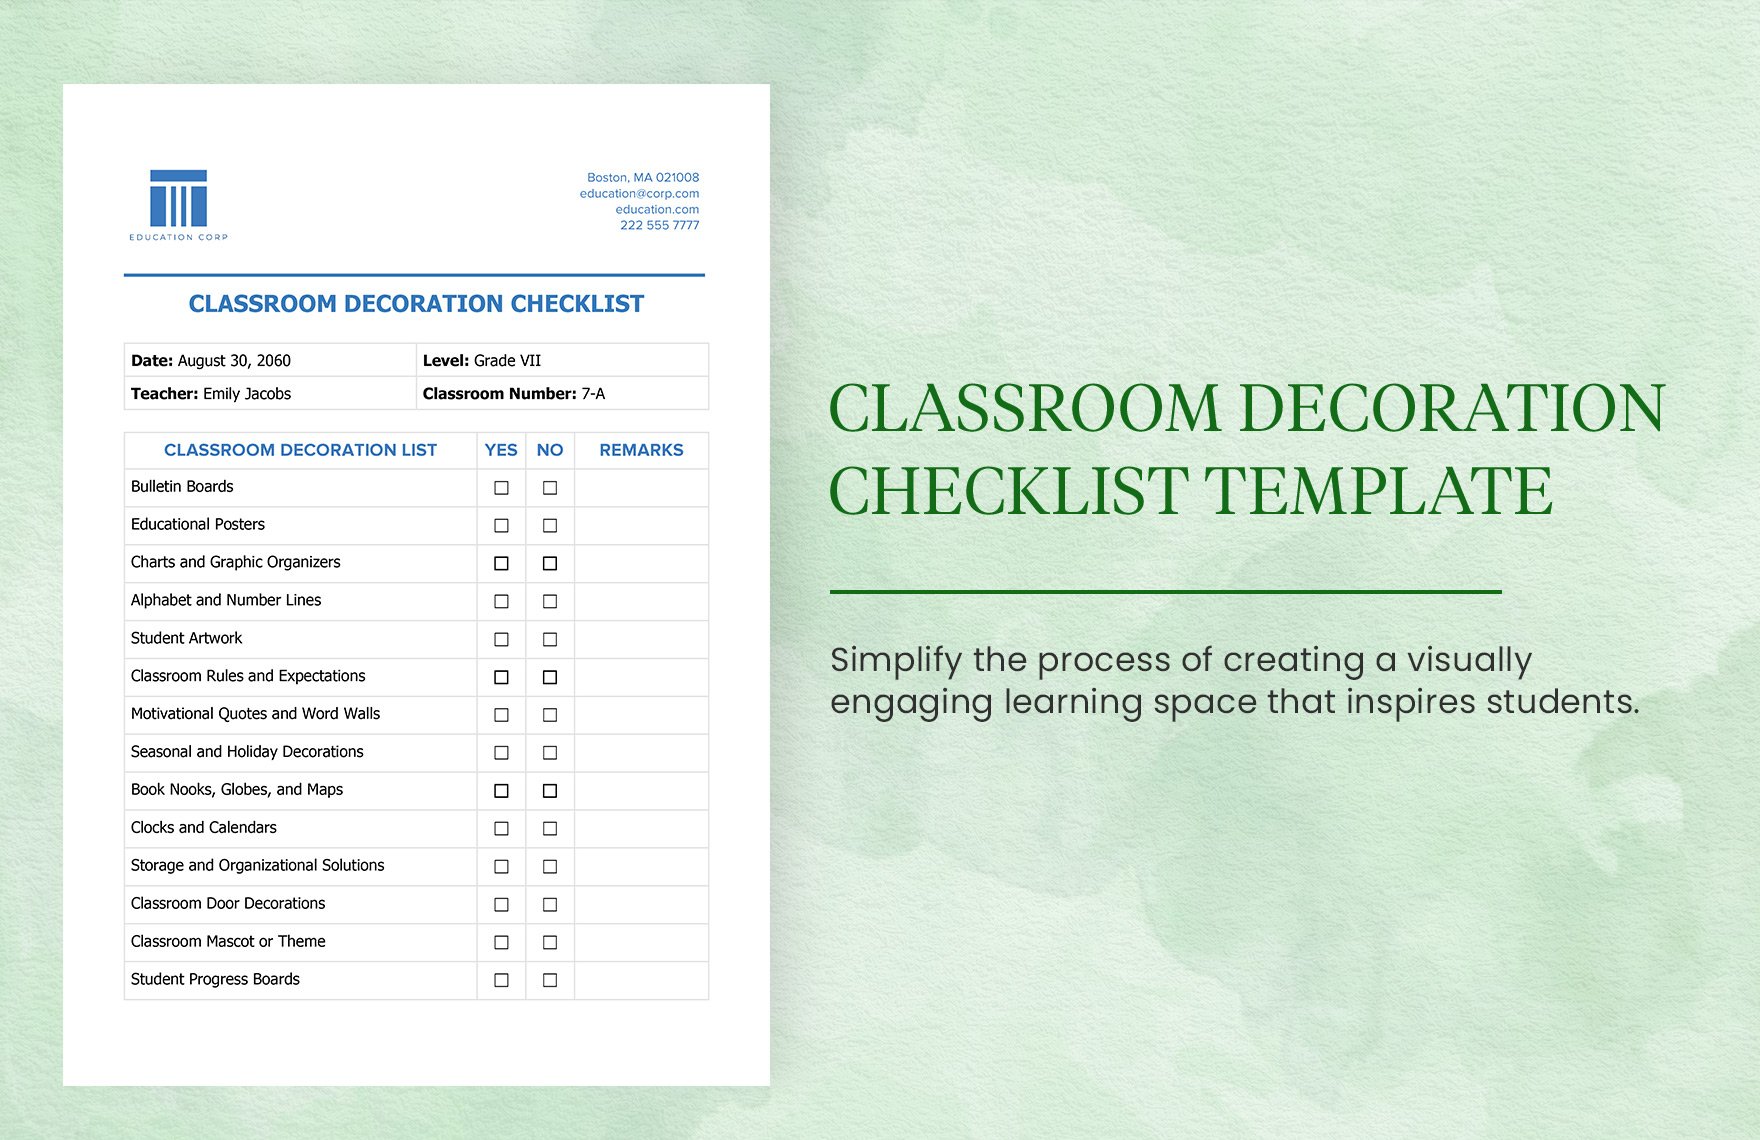 Classroom Decoration Checklist Template in Word, Google Docs, PDF